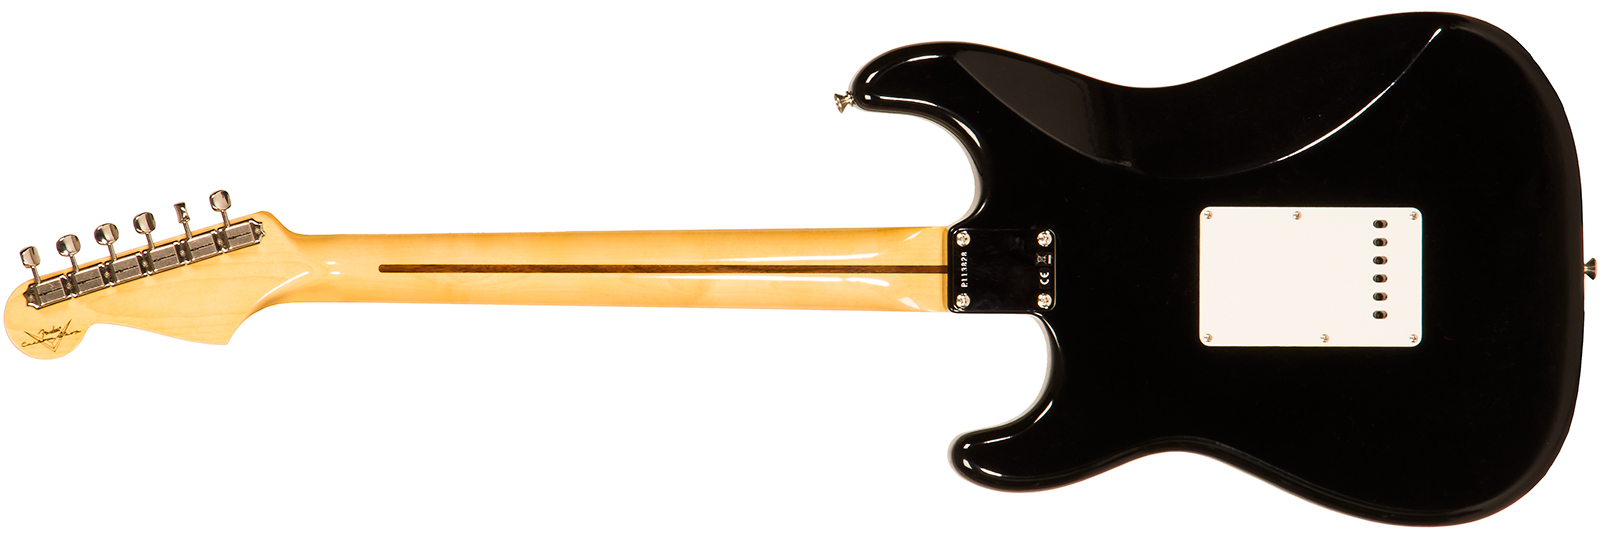 Fender Custom Shop Strat 1958 3s Trem Mn #r113828 - Closet Classic Black - Str shape electric guitar - Variation 1